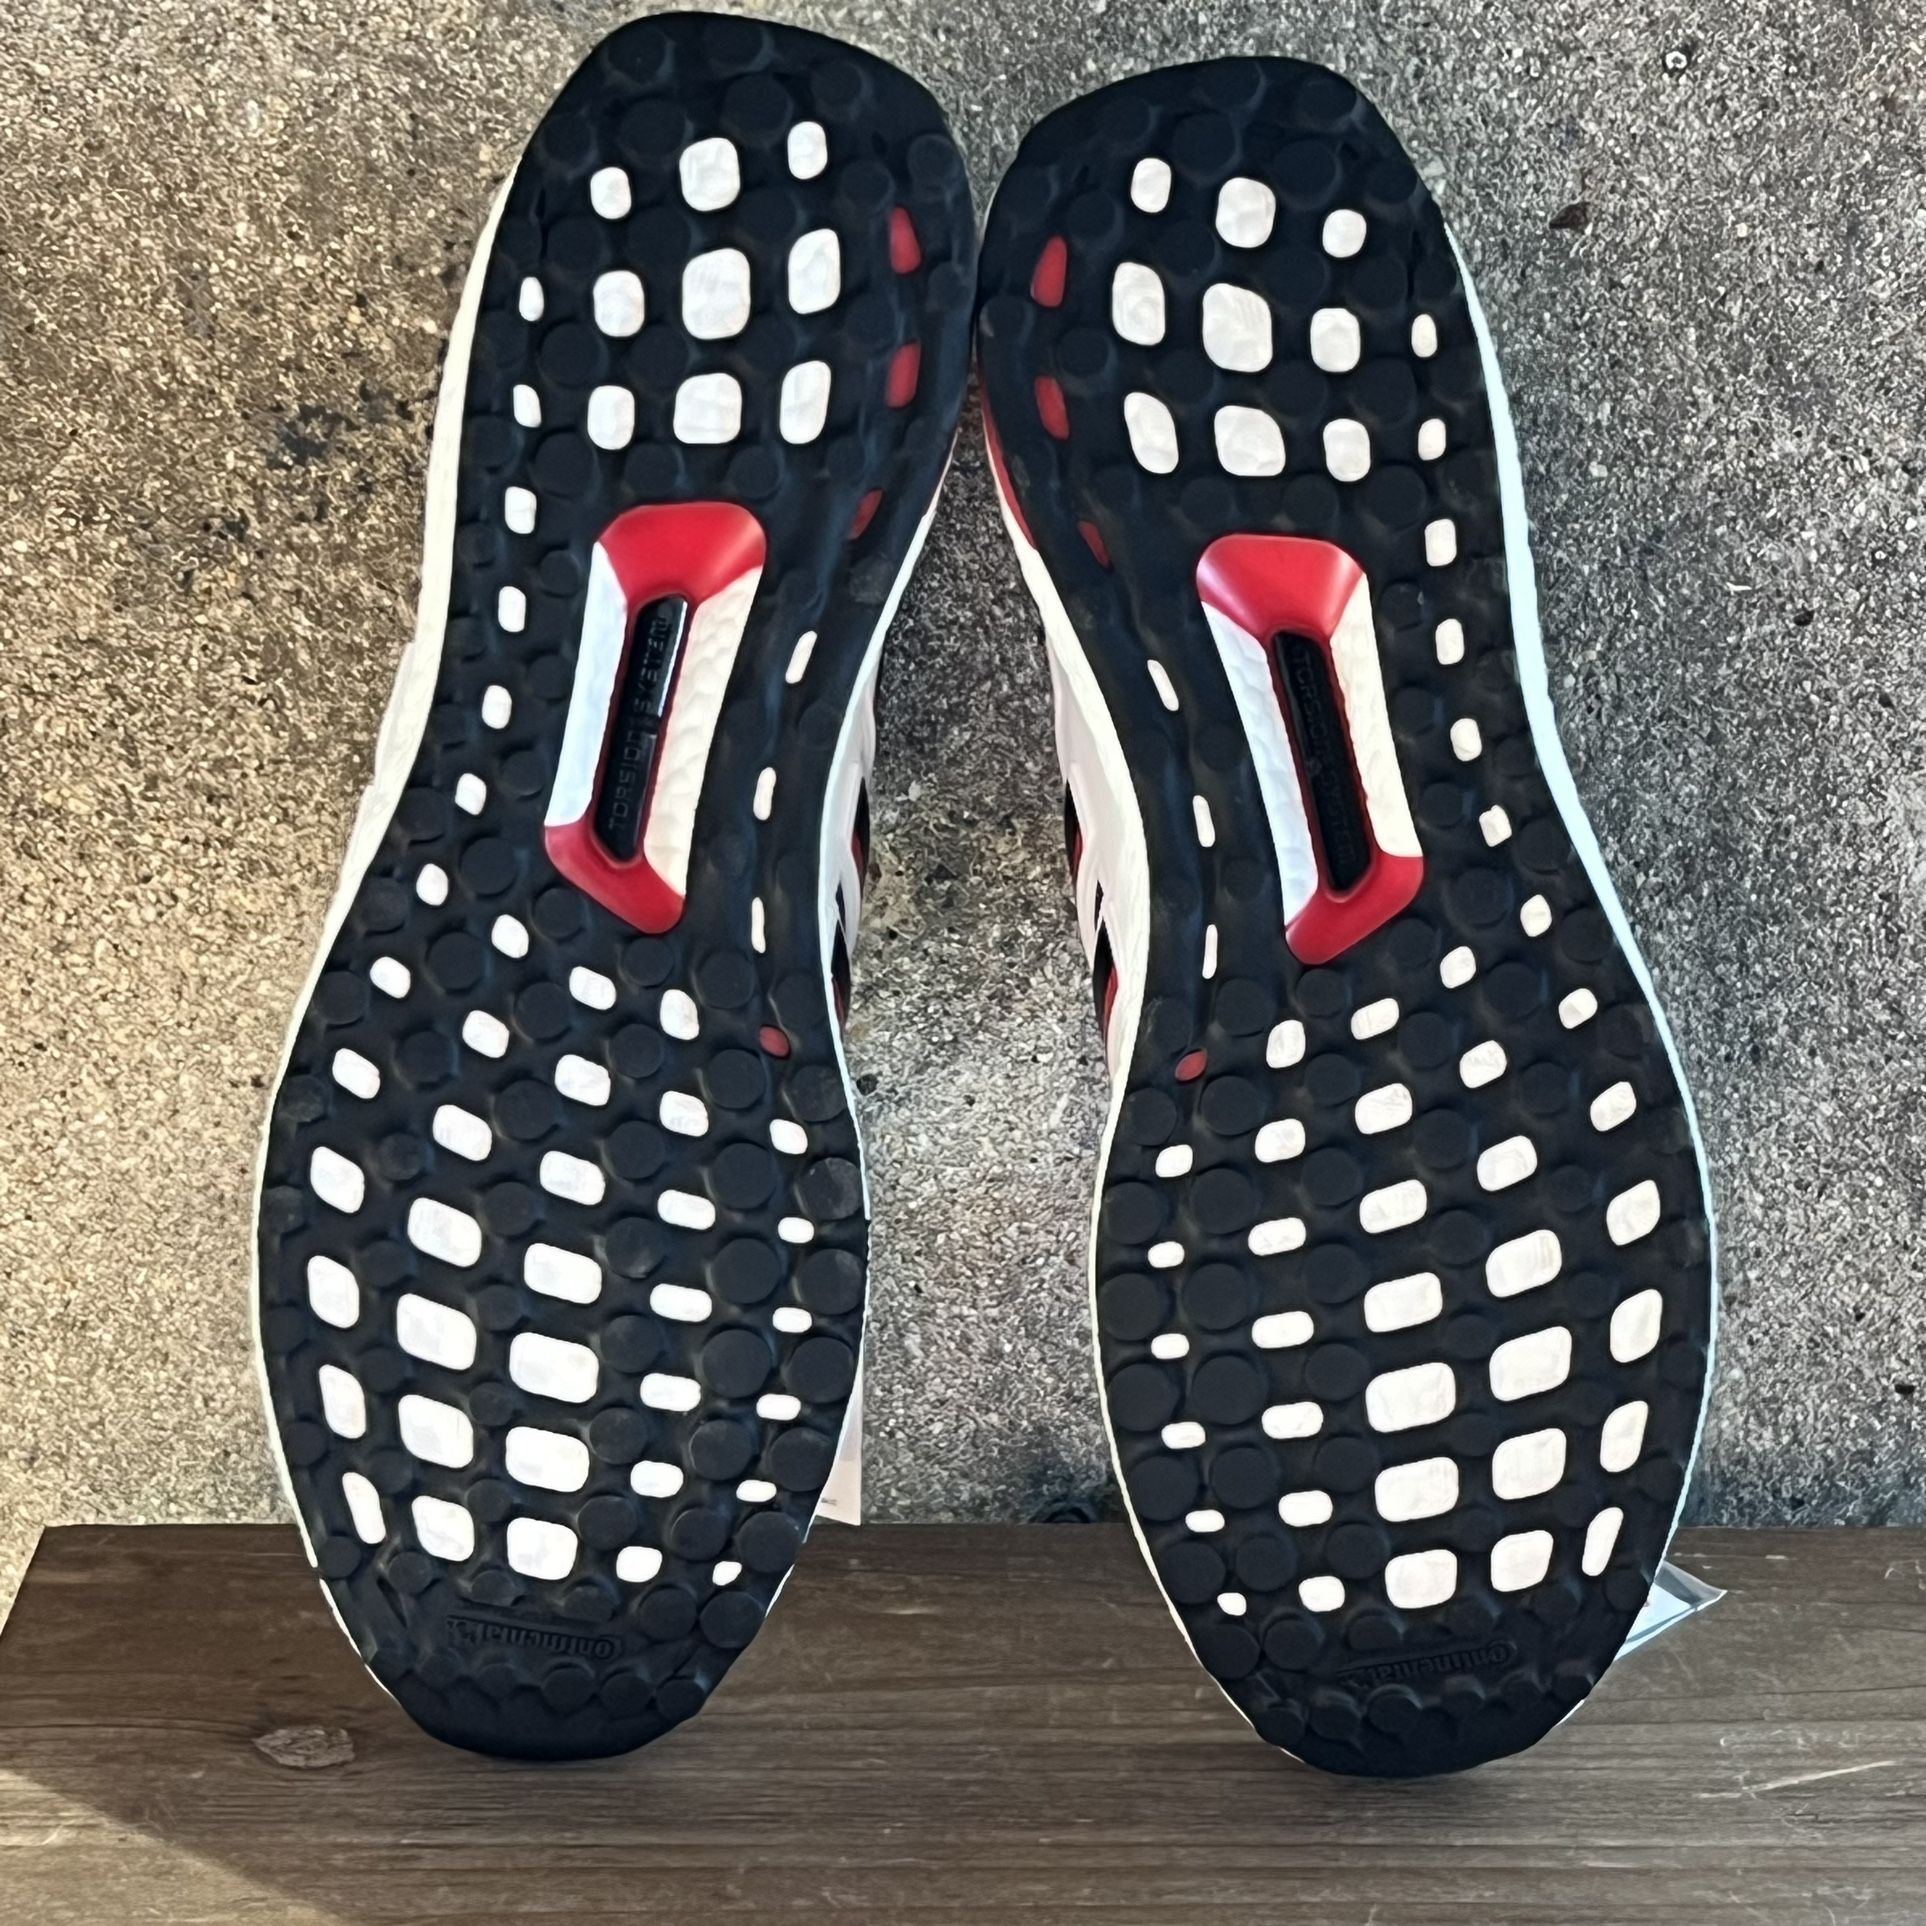 Adidas Men's Ultraboost 1.0 DNA Louisville Shoes